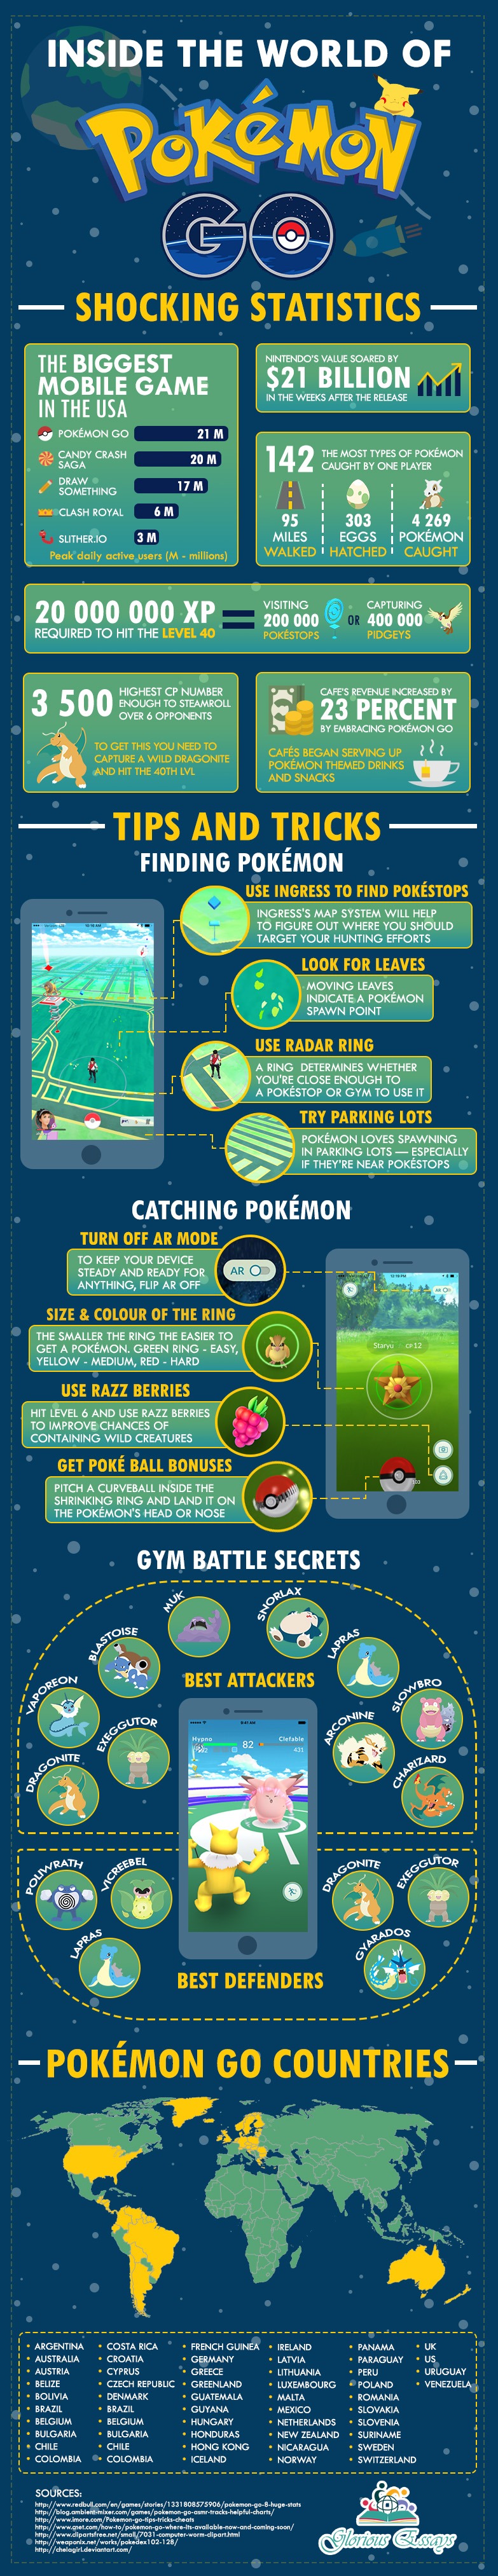 infographic_inside_the_world_of_pokemon_go (1)